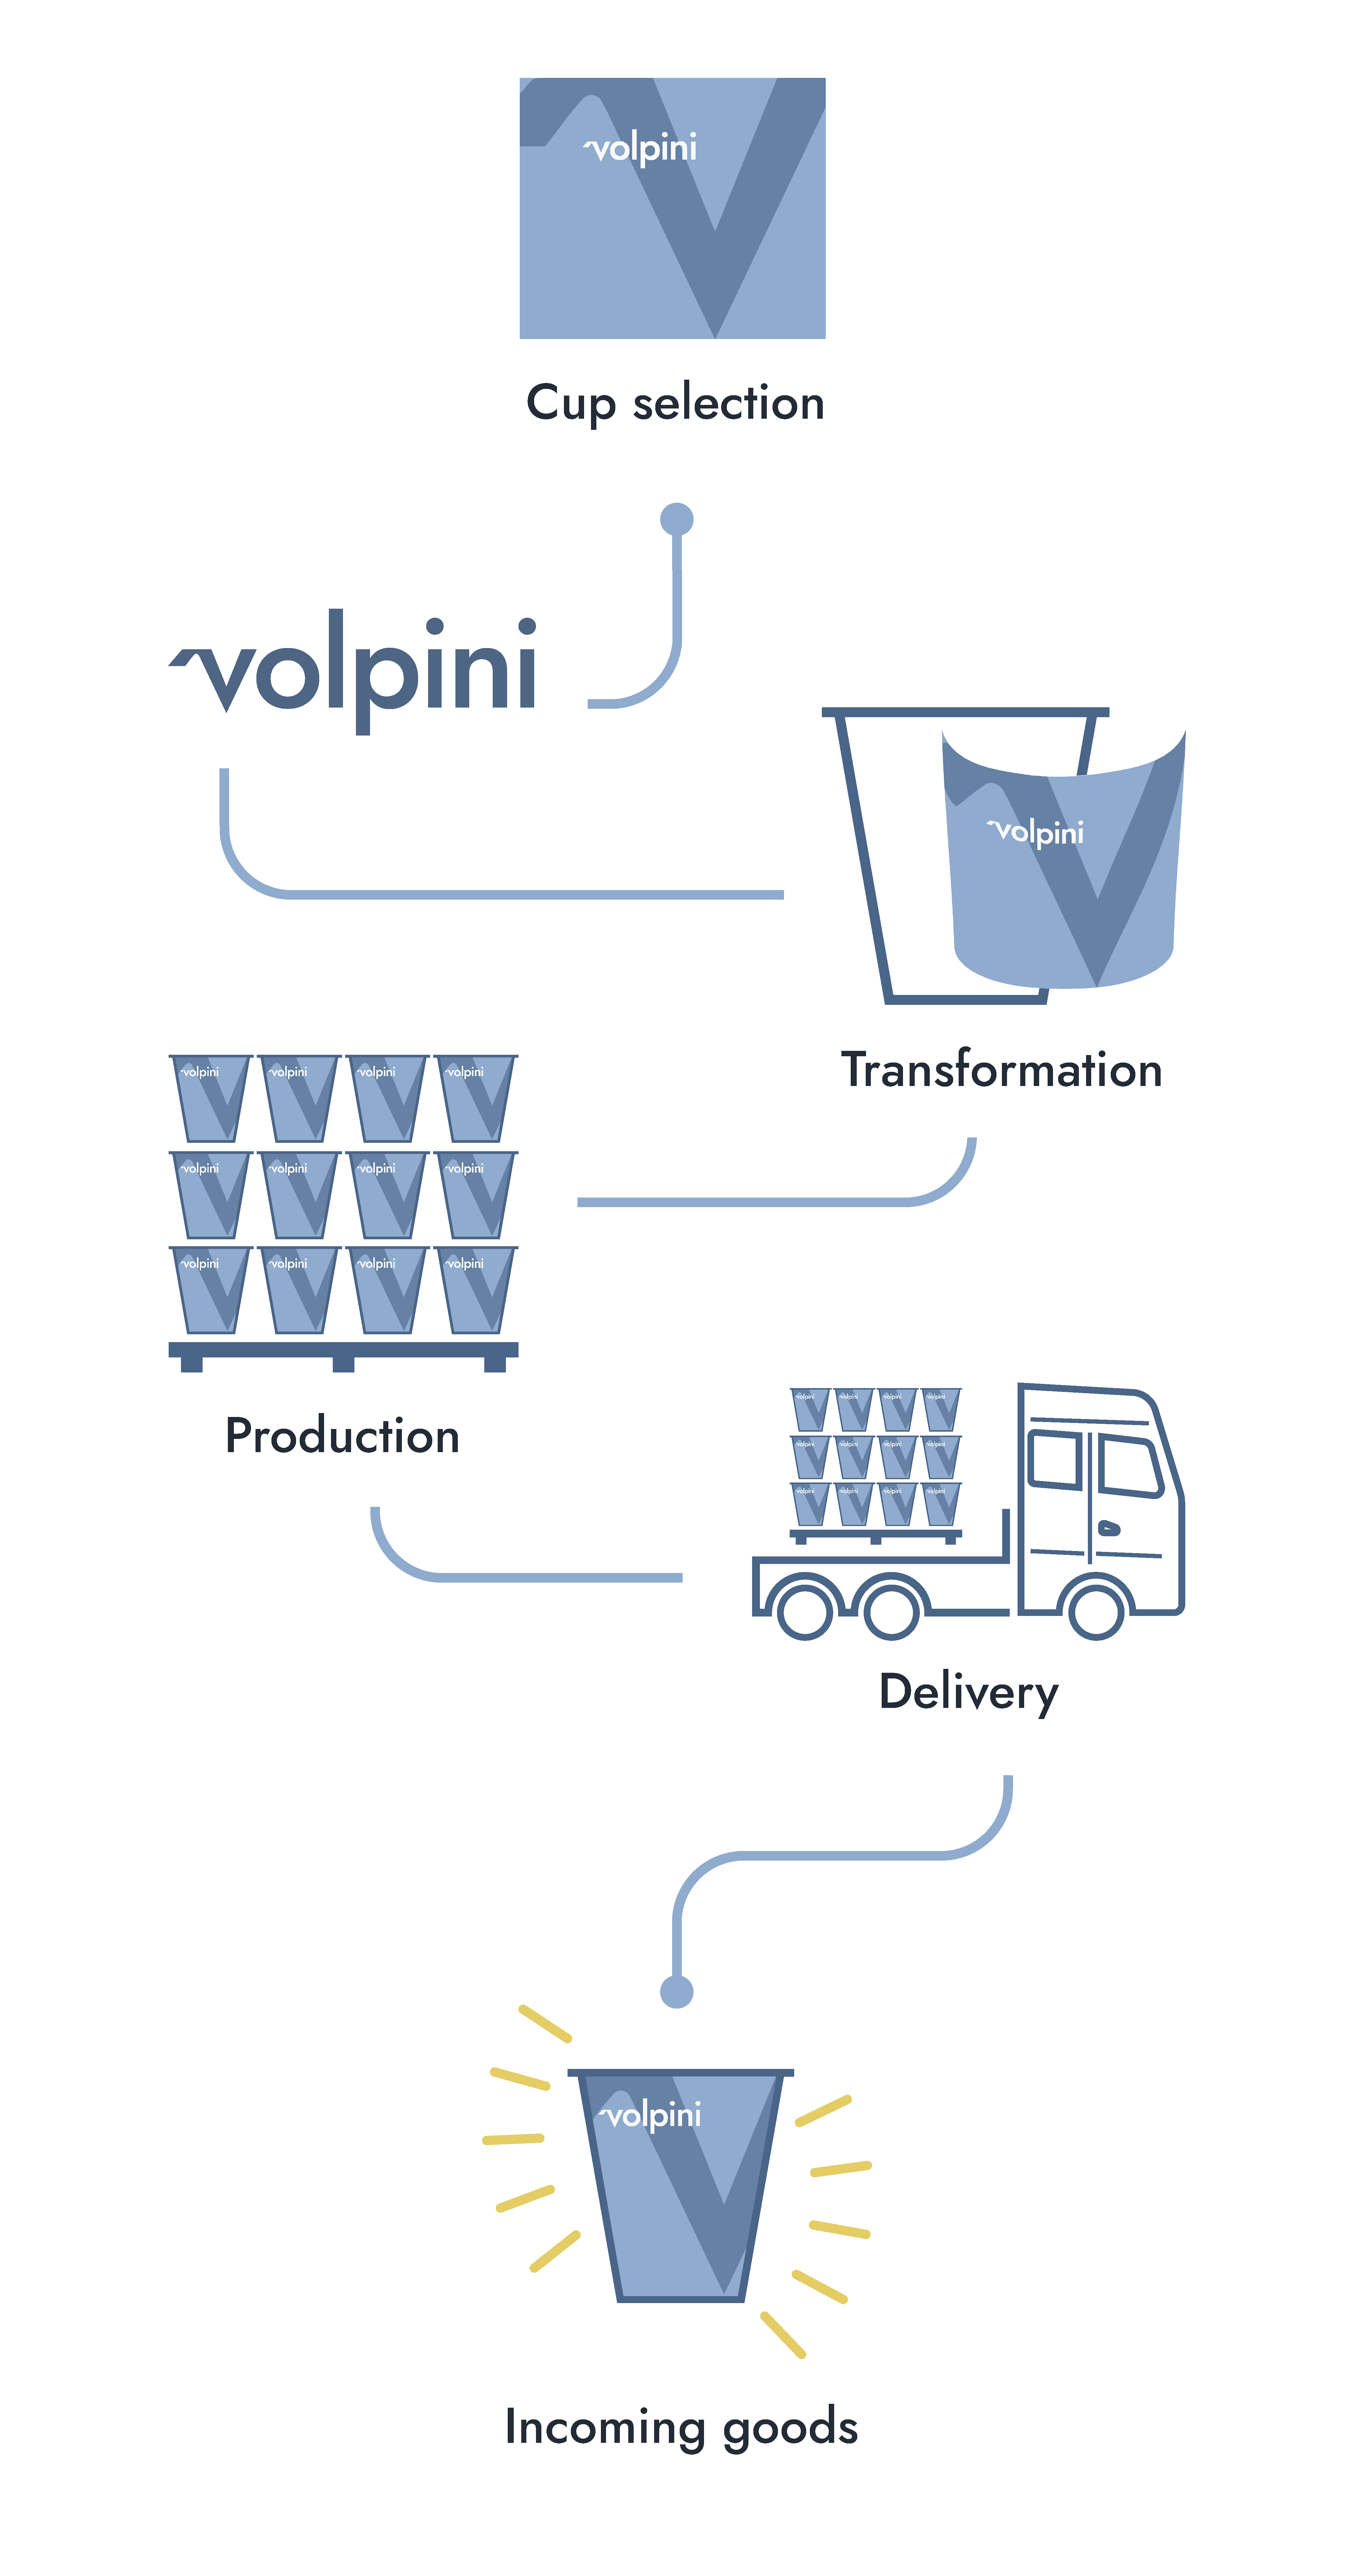 The Order Process at Volpini